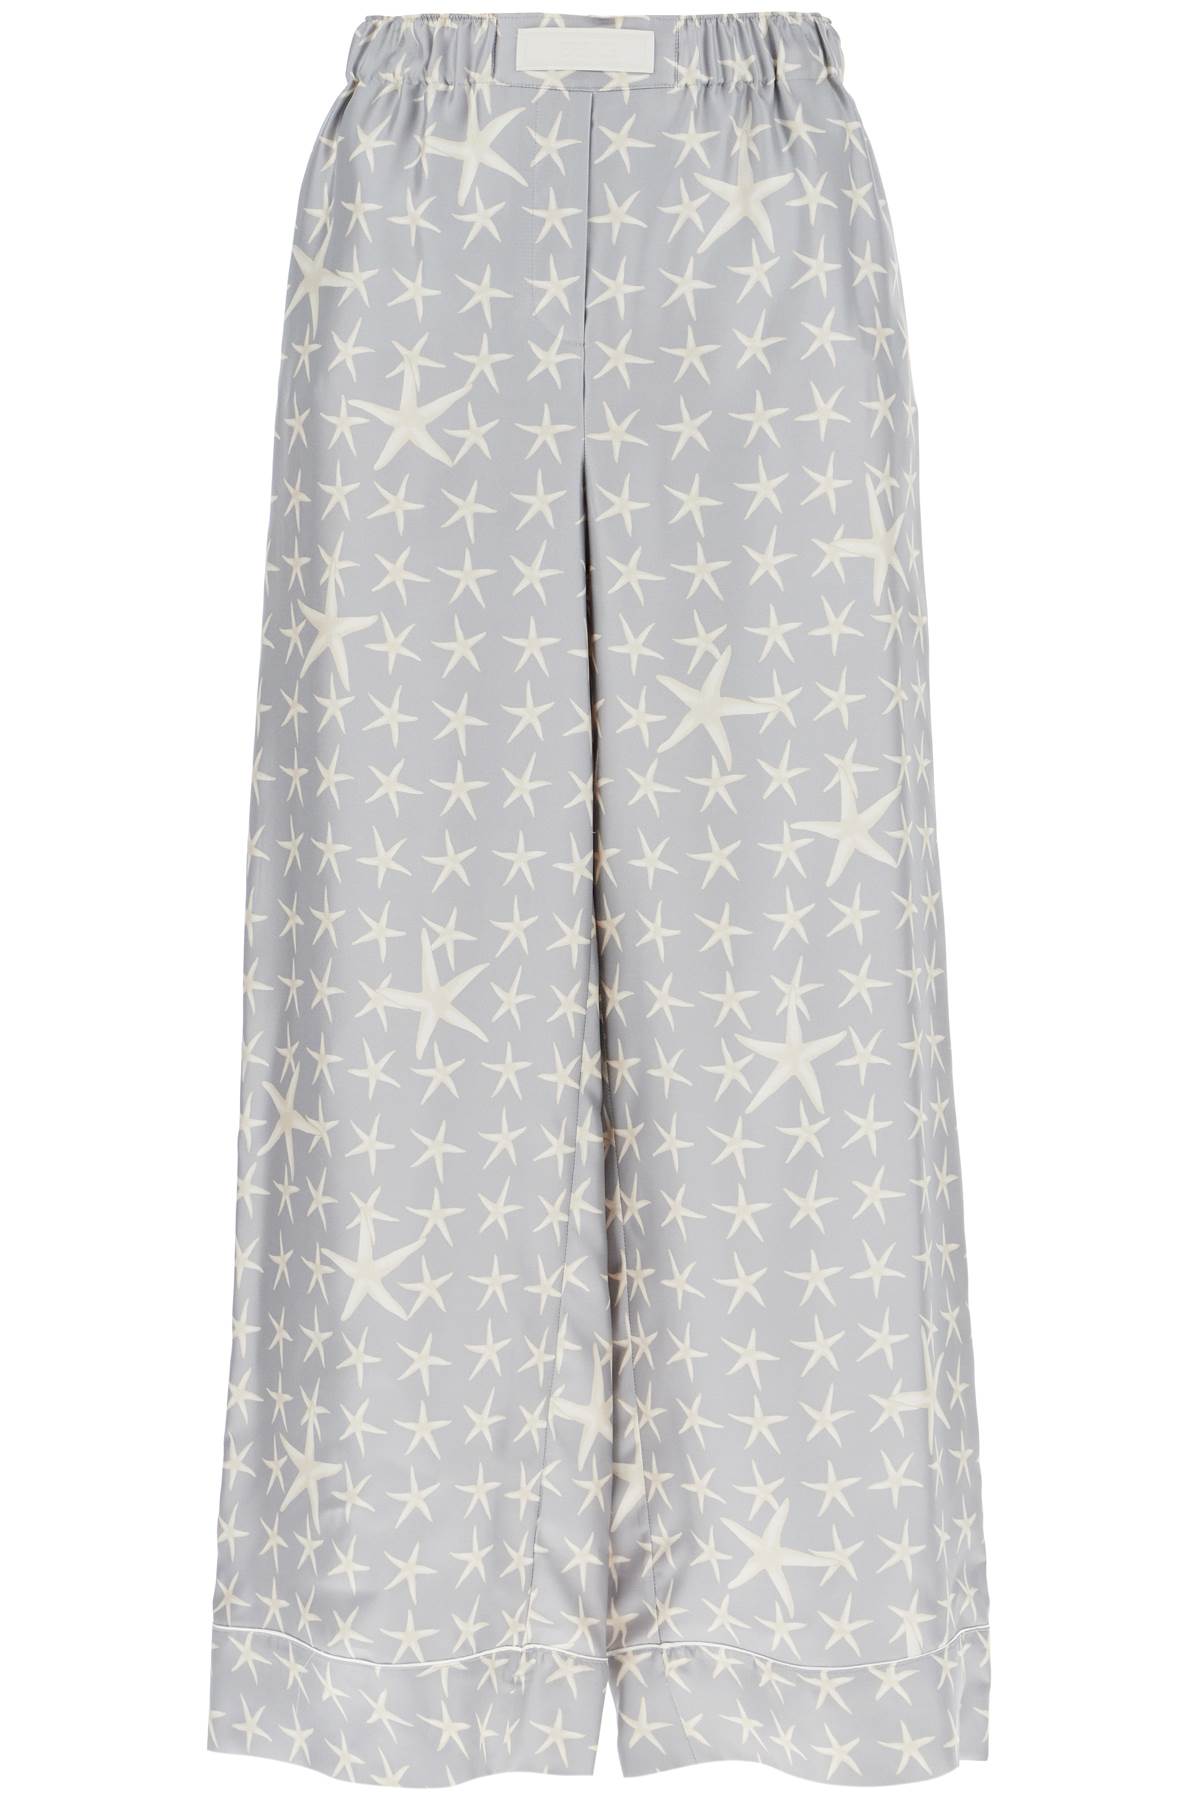 Versace VERSACE silk pants with starfish print